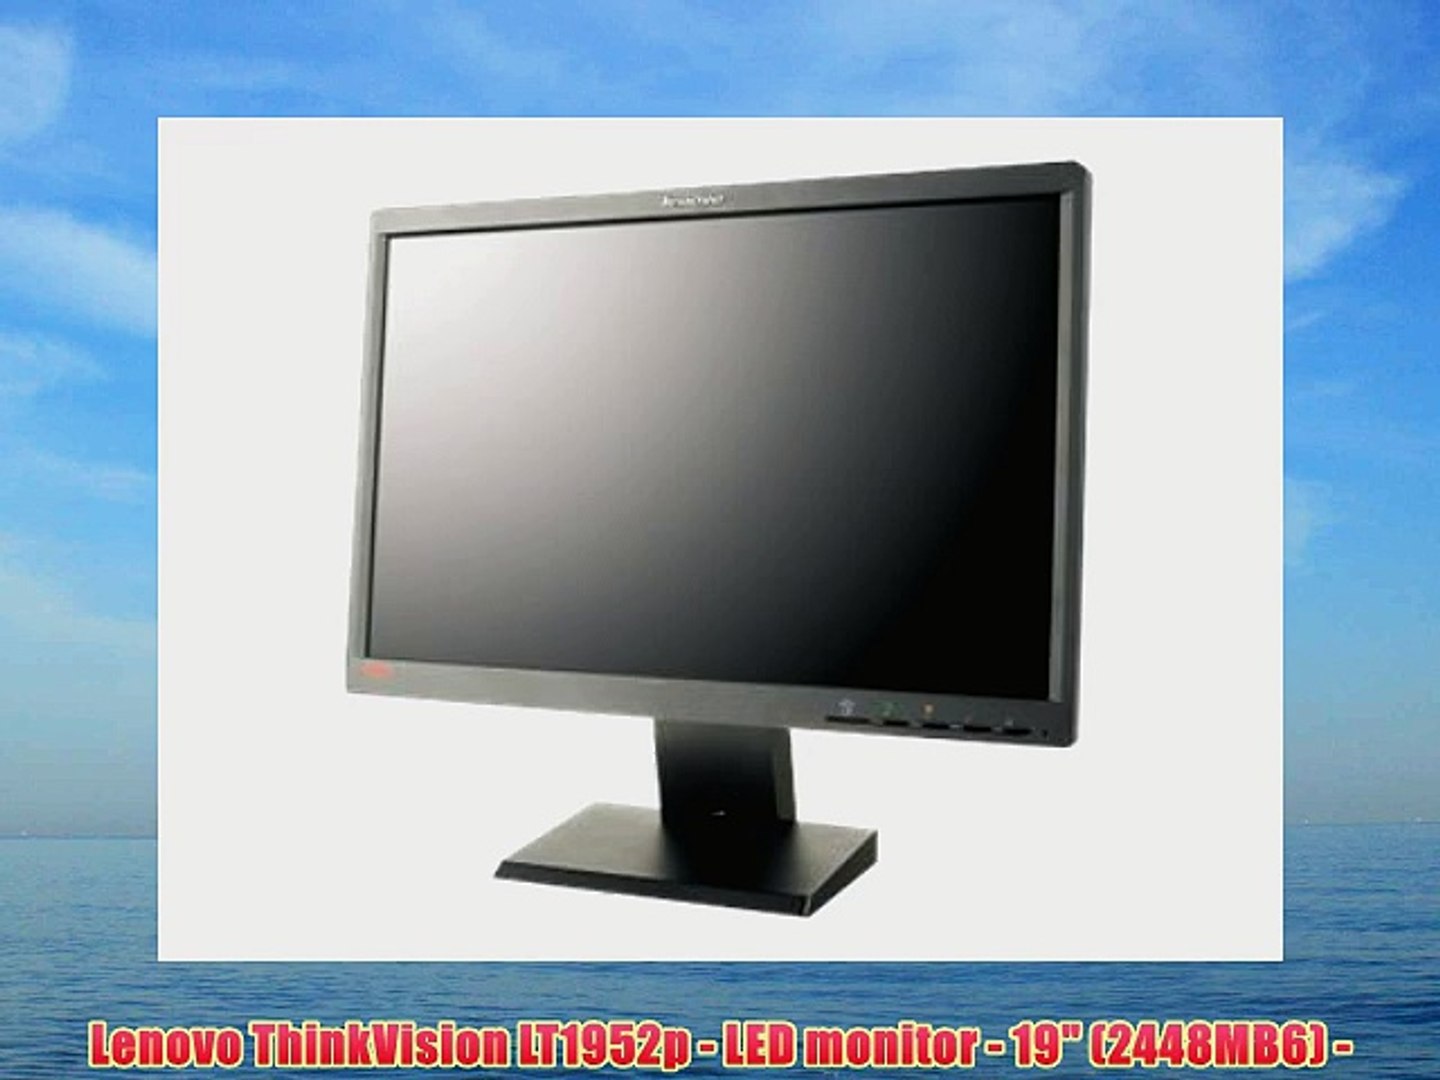 Lenovo ThinkVision LT1952p - LED monitor - 19 (2448MB6) - - video ...